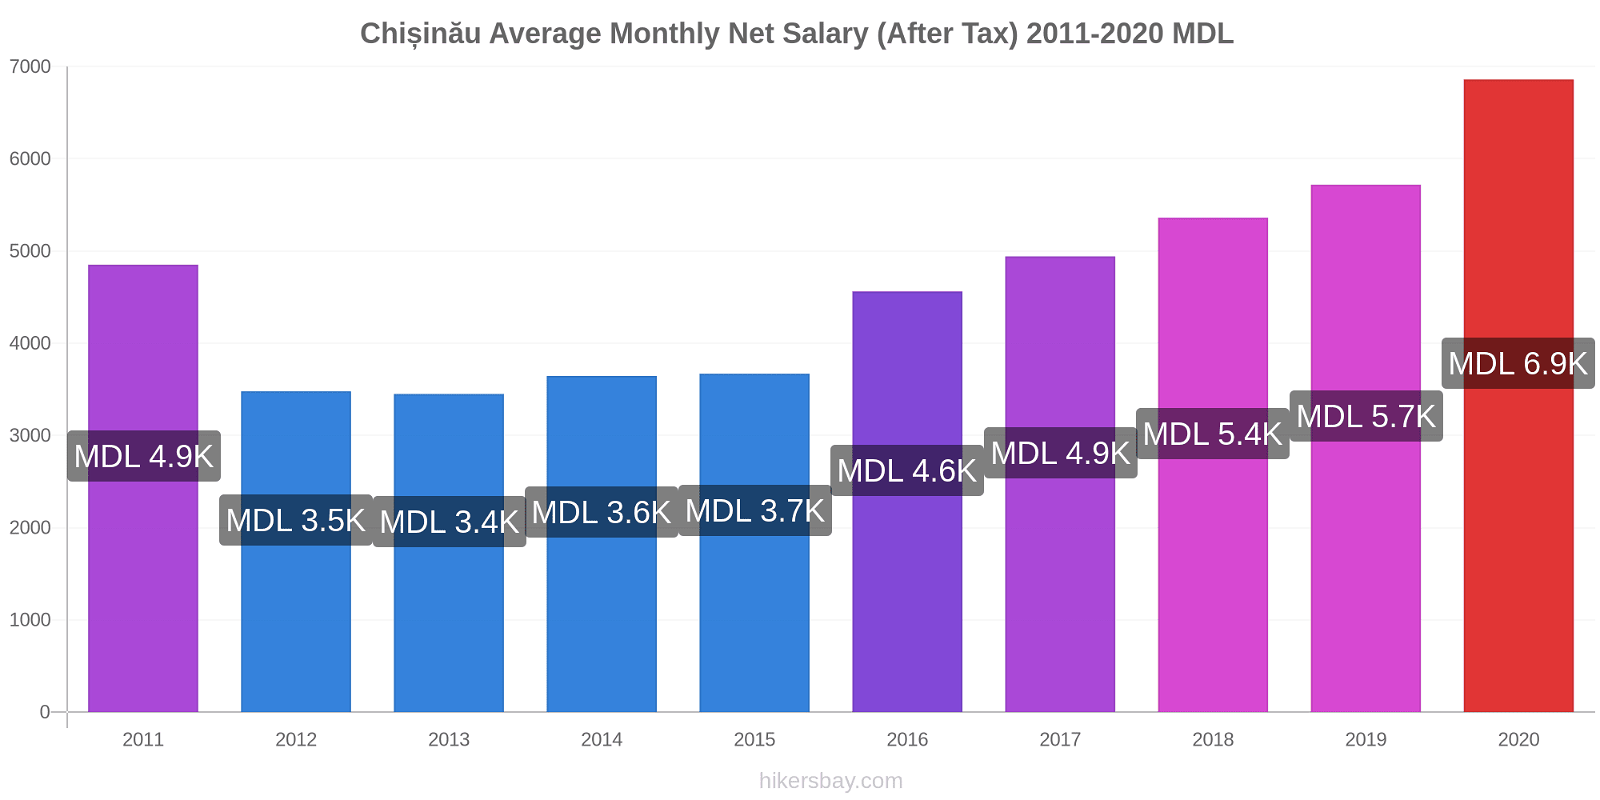 Chișinău price changes Average Monthly Net Salary (After Tax) hikersbay.com